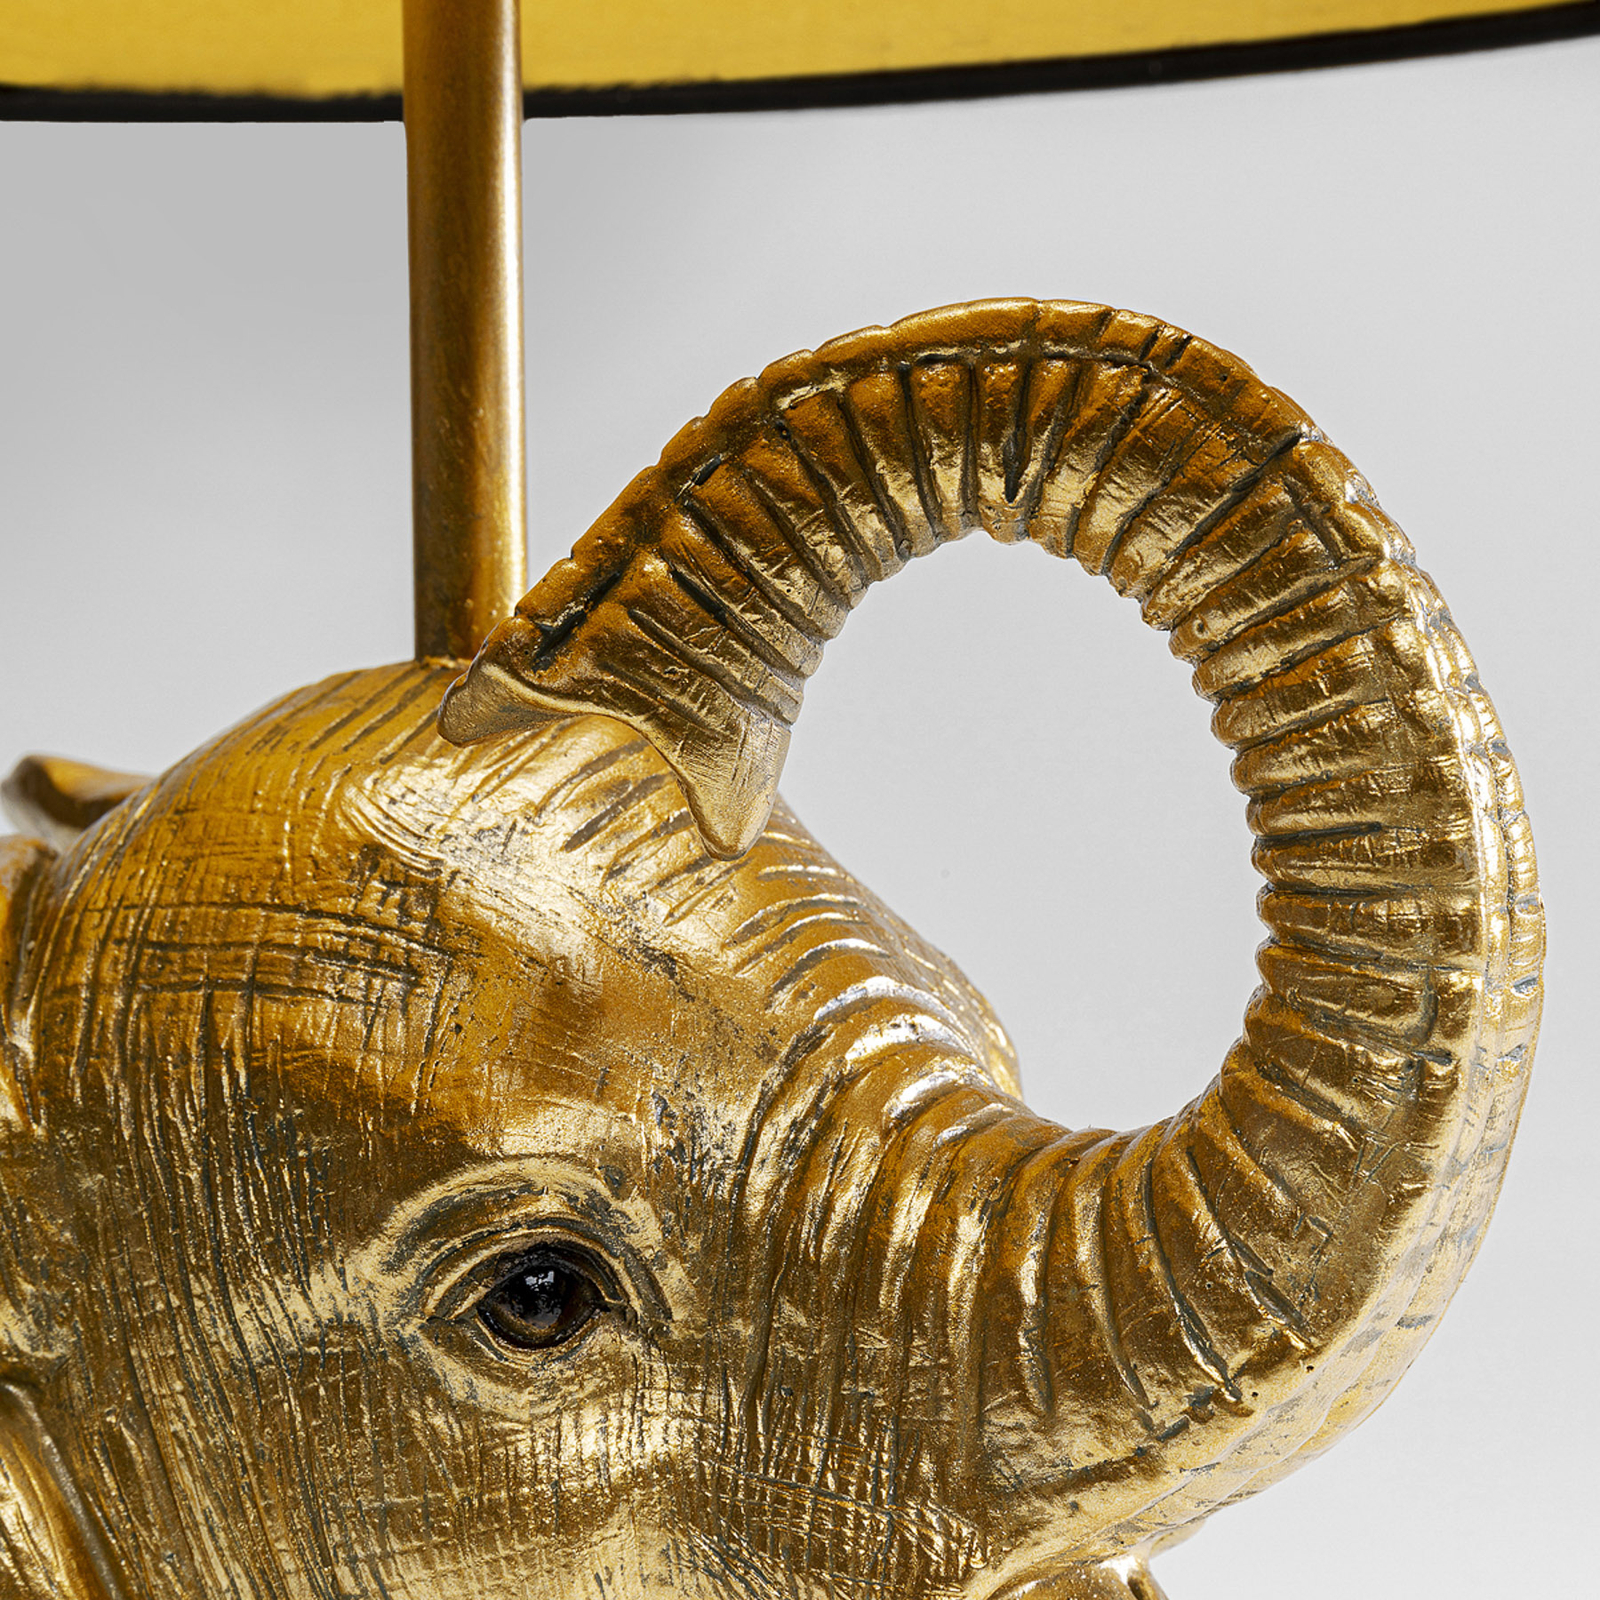 KARE Happy Elefant bordslampa med skärm